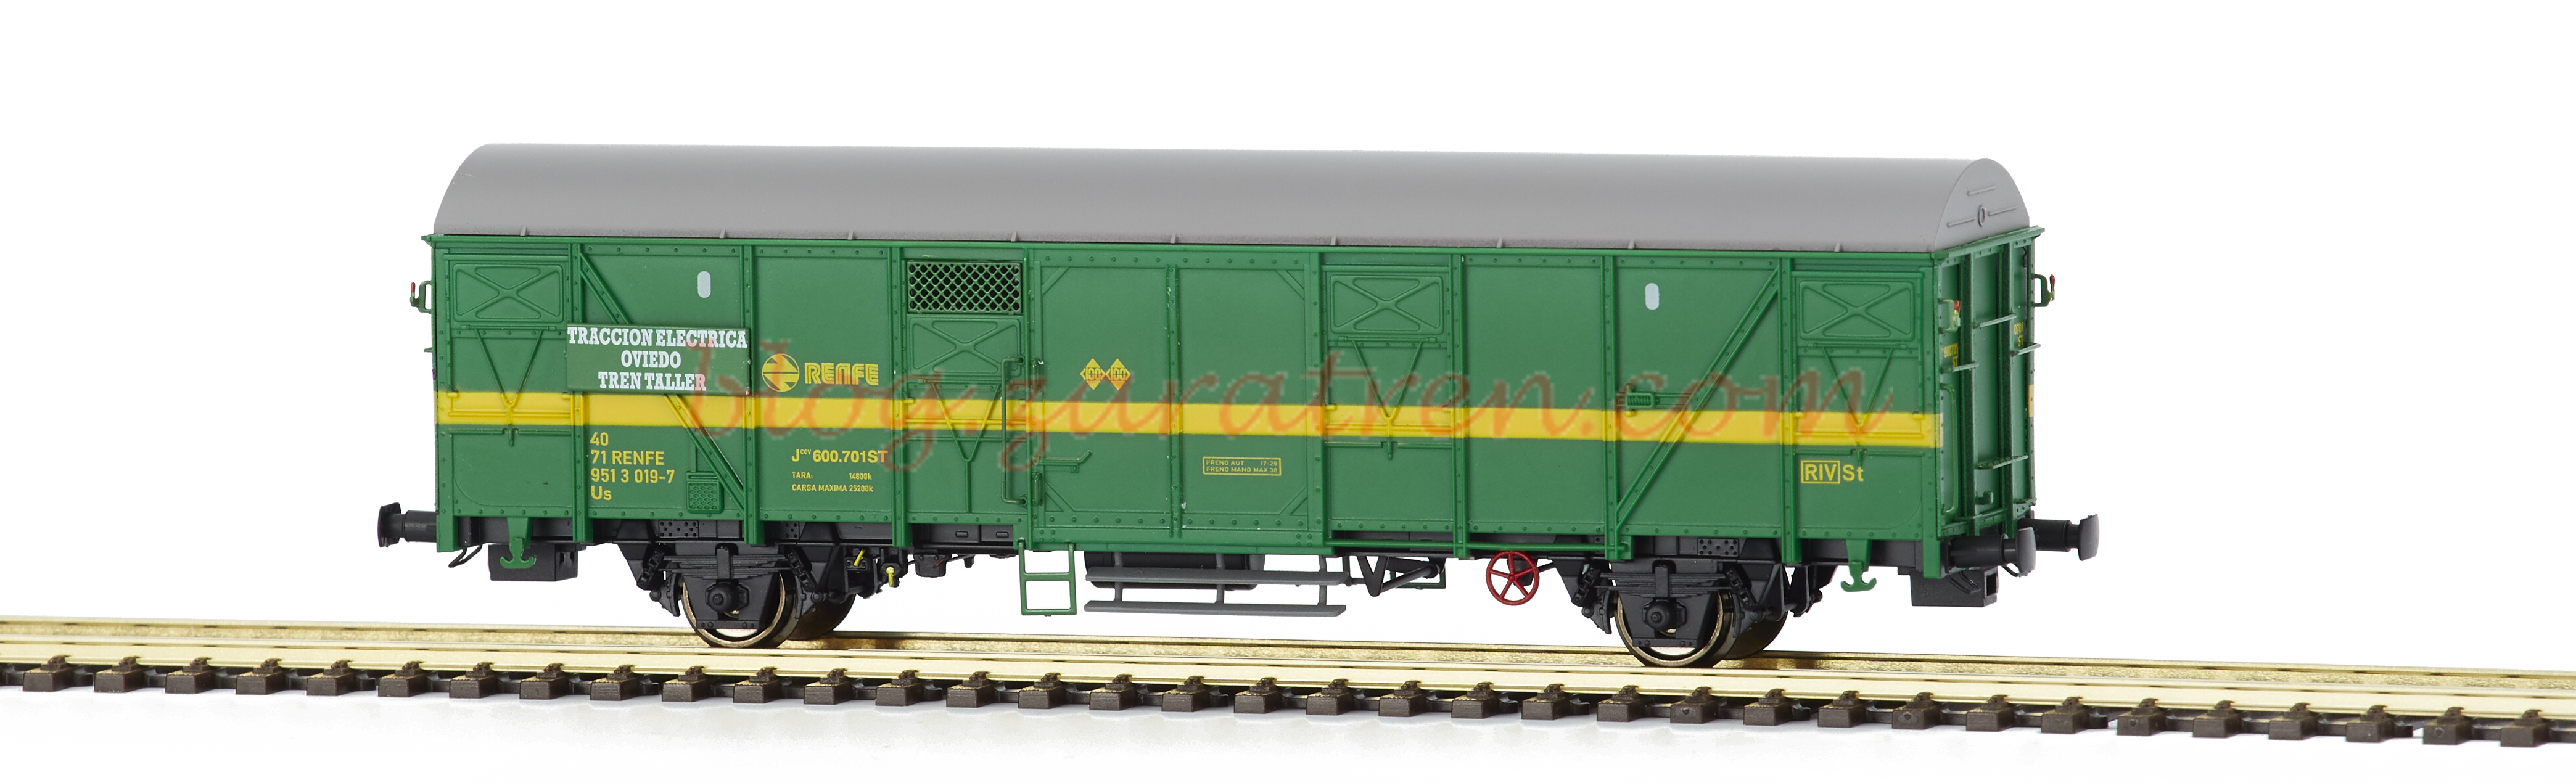 Mabar – Vagón RENFE Tren Taller , Jcev600701, Color verde, Escala H0, Ref: 81824.